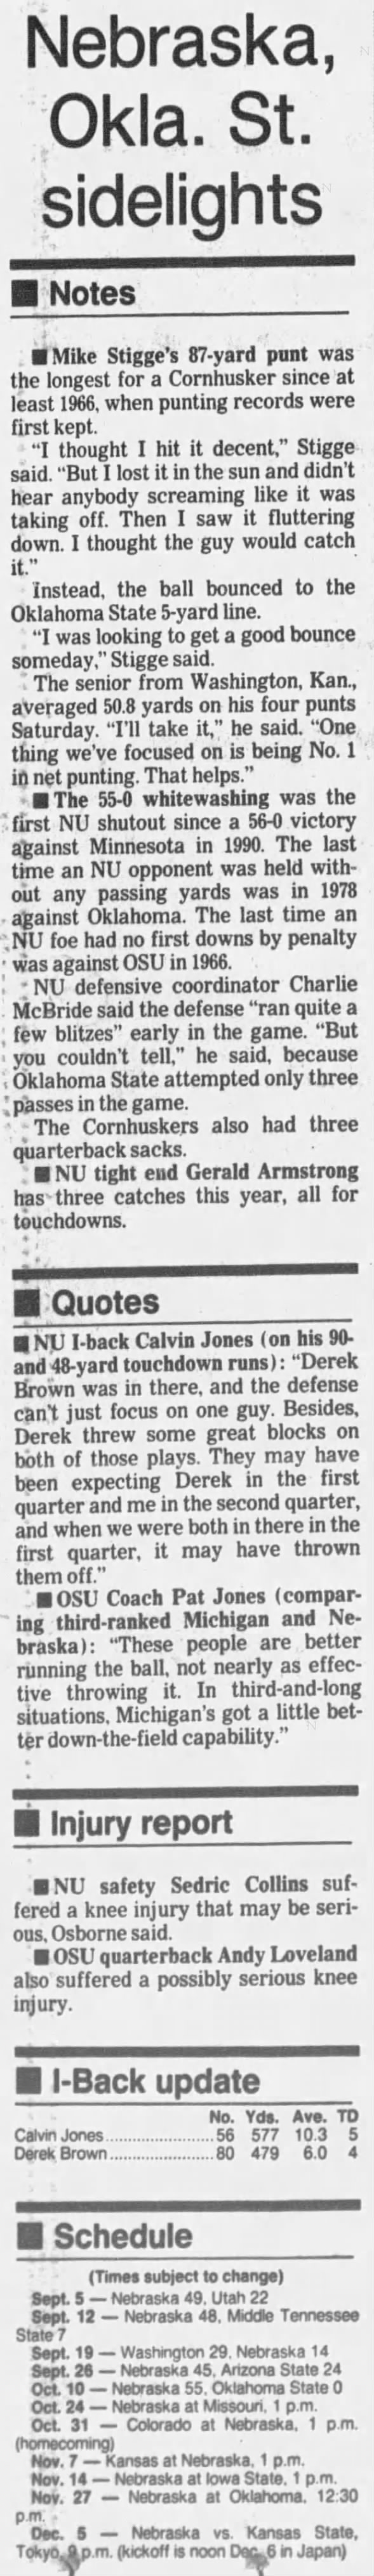 1992 Nebraska-Oklahoma State football game notes